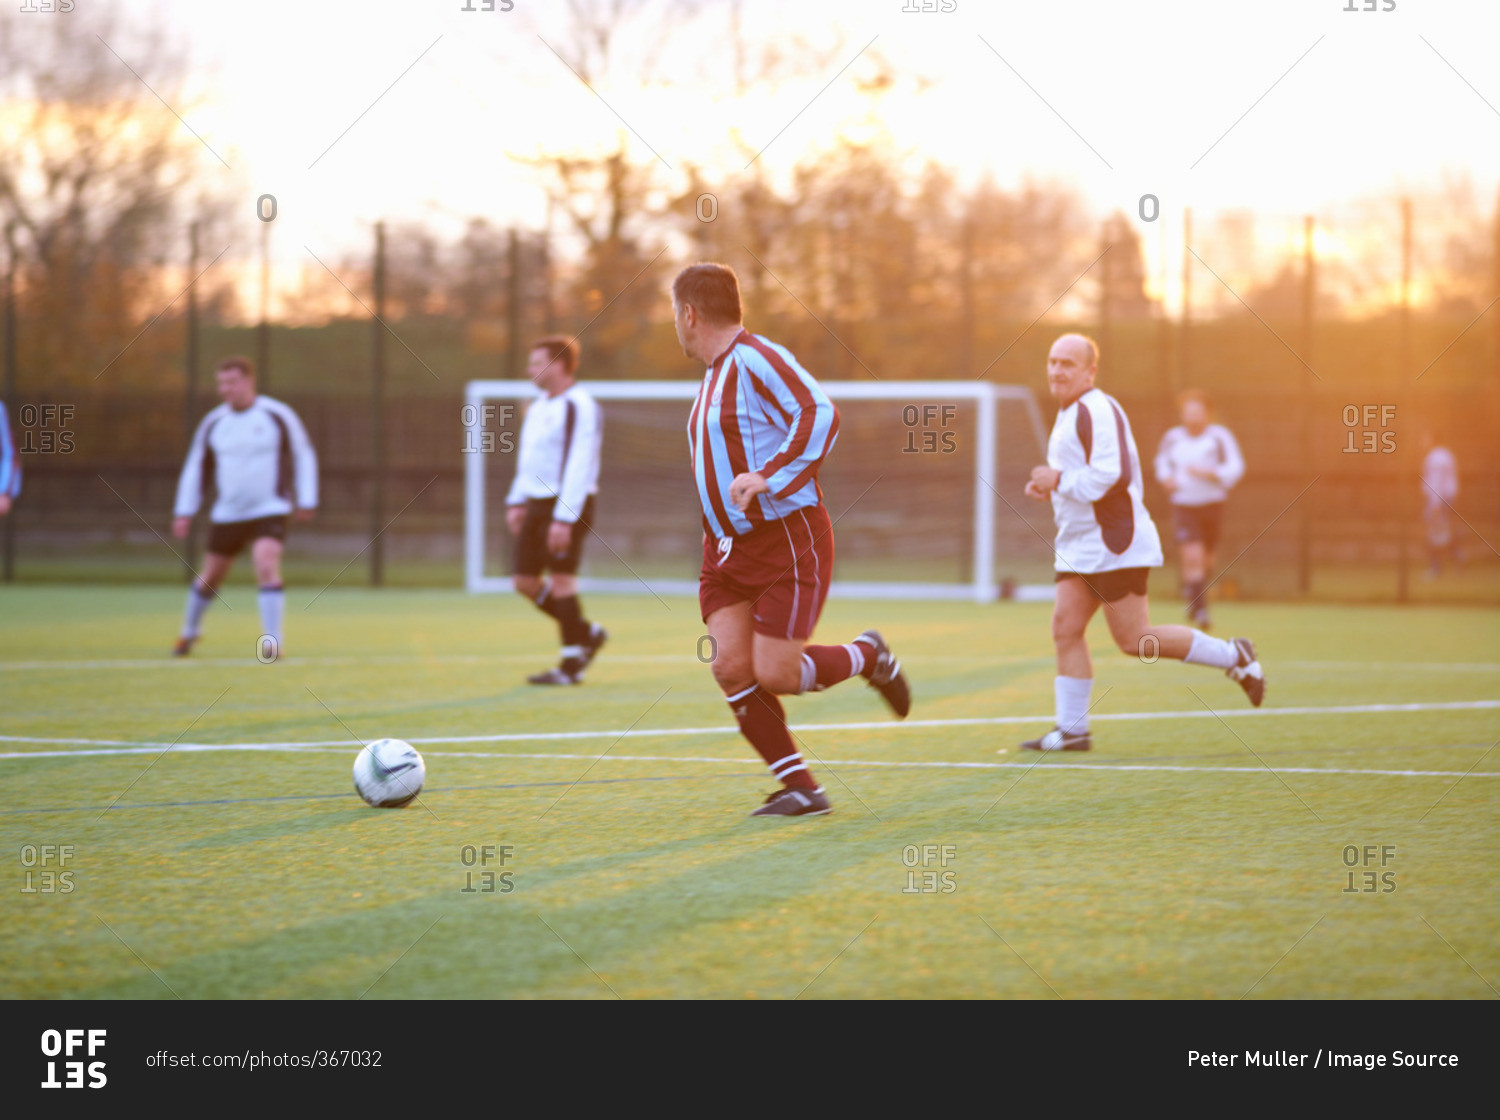 Soccer players running after ball